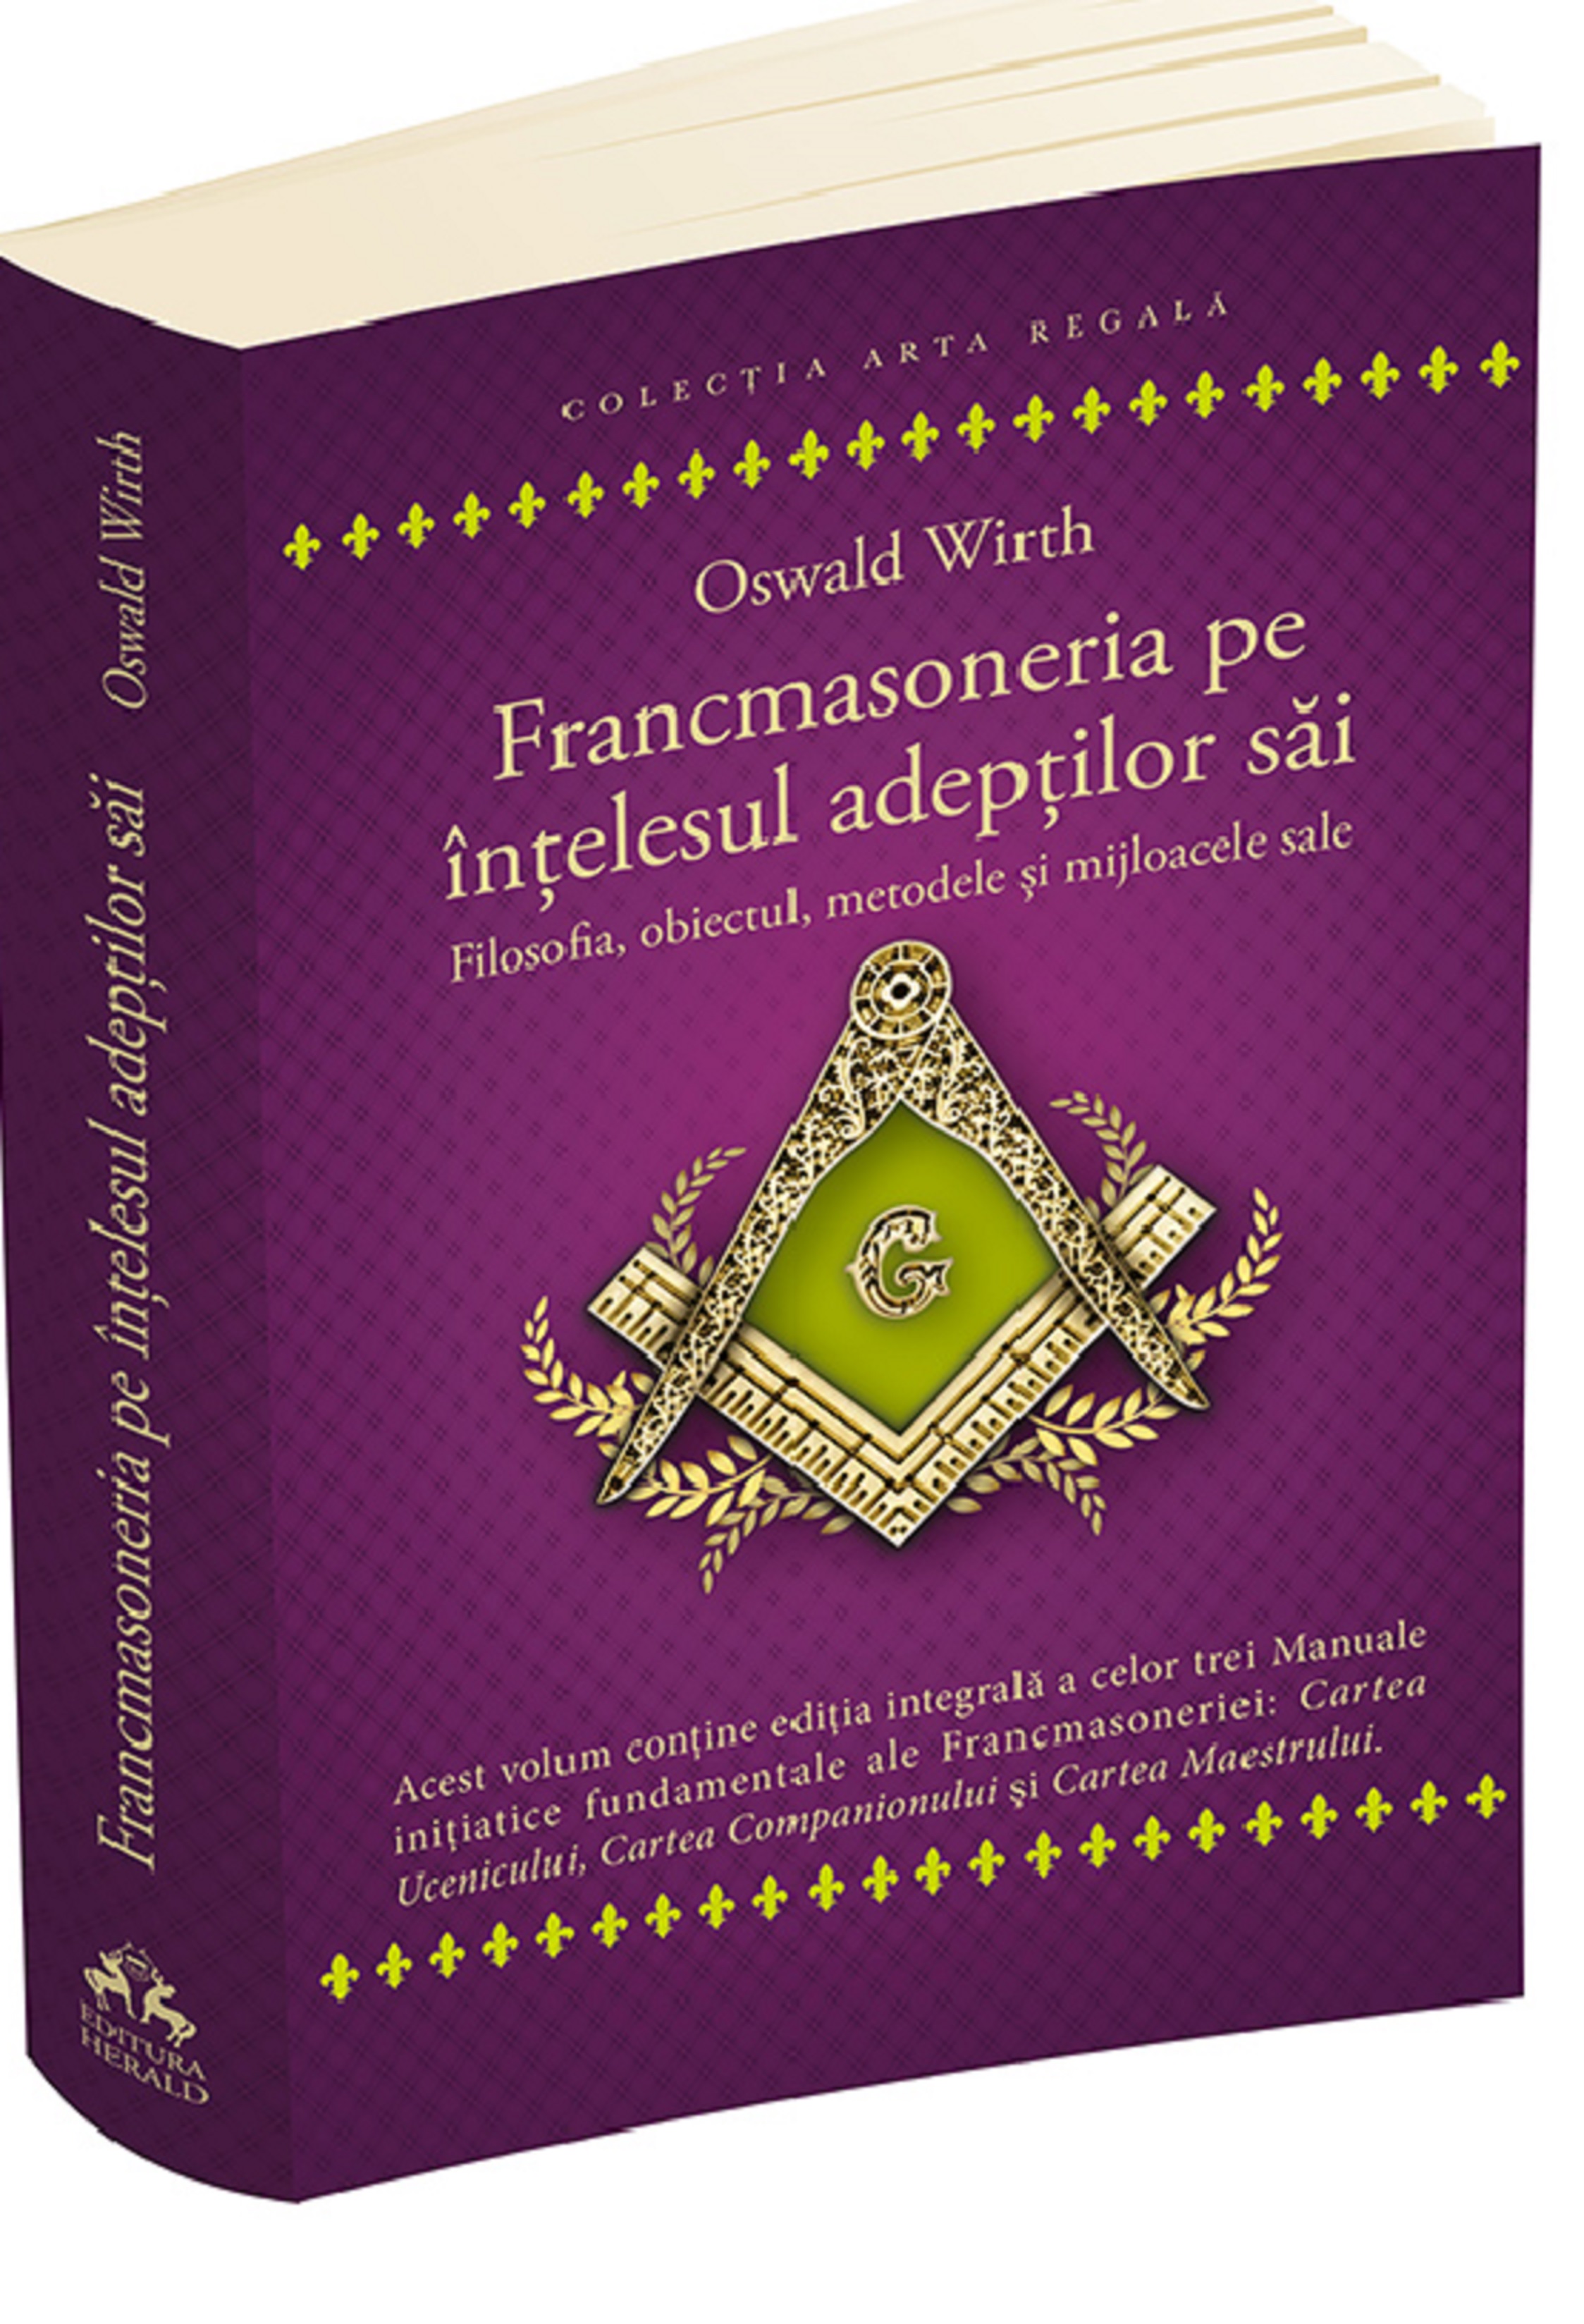 Francmasoneria pe intelesul adeptilor sai | Oswald Wirth carturesti.ro poza bestsellers.ro